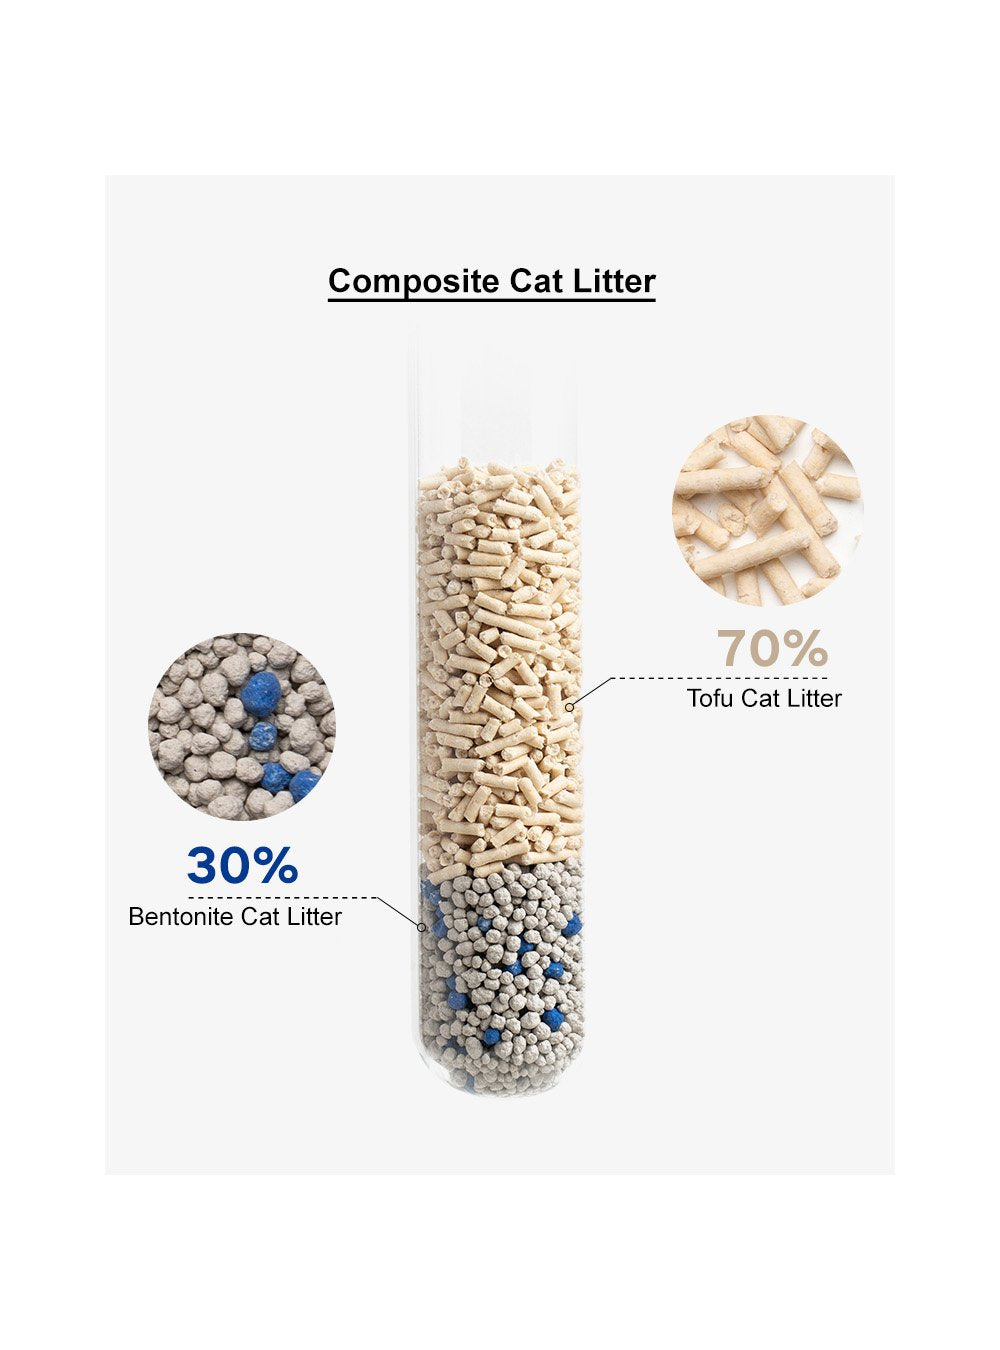 Composite Tofu Cat Litter with Whole Bentonite